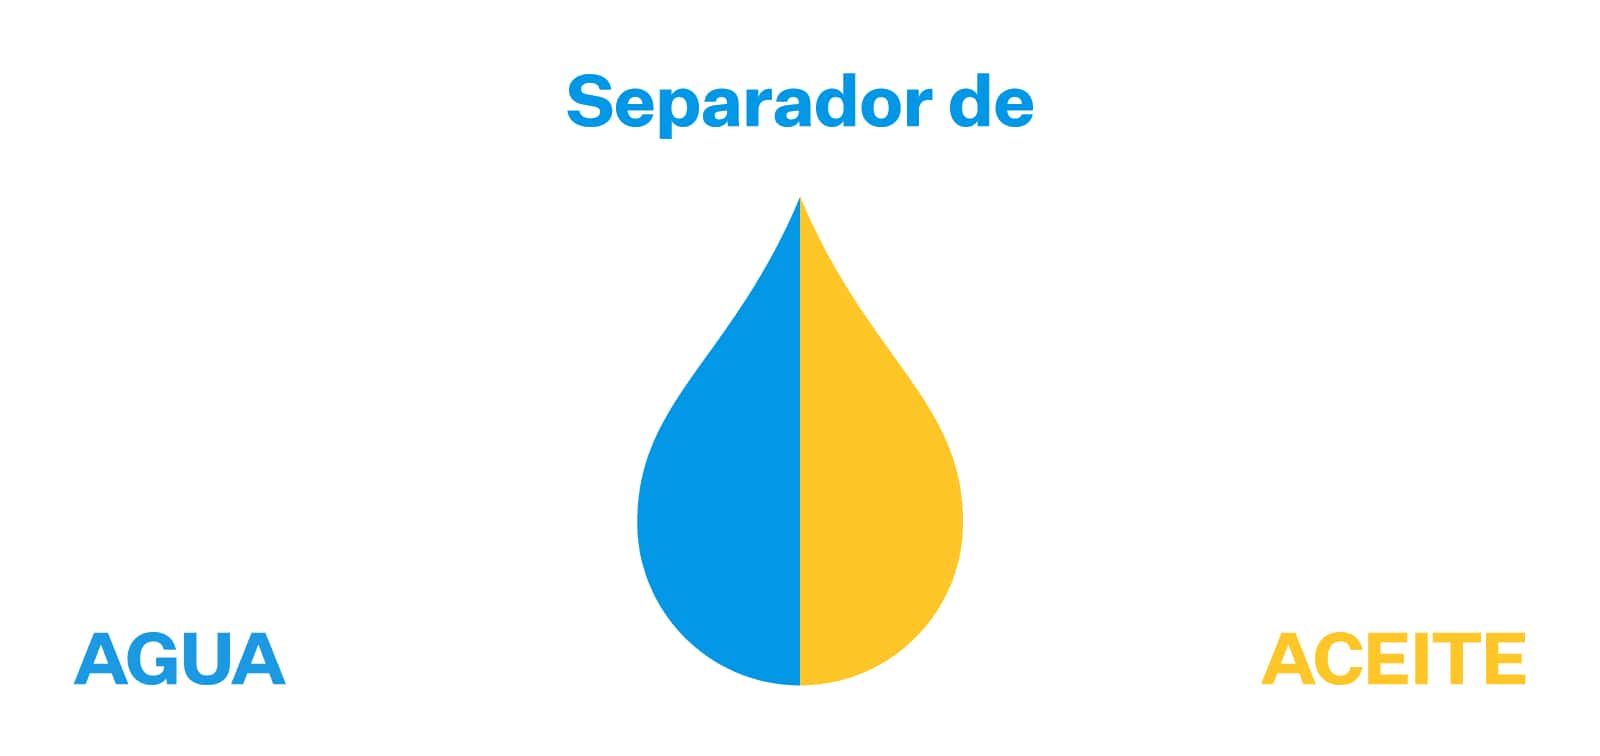 Separador-Aceite-Agua-Atlas-Copco-MR-Peru